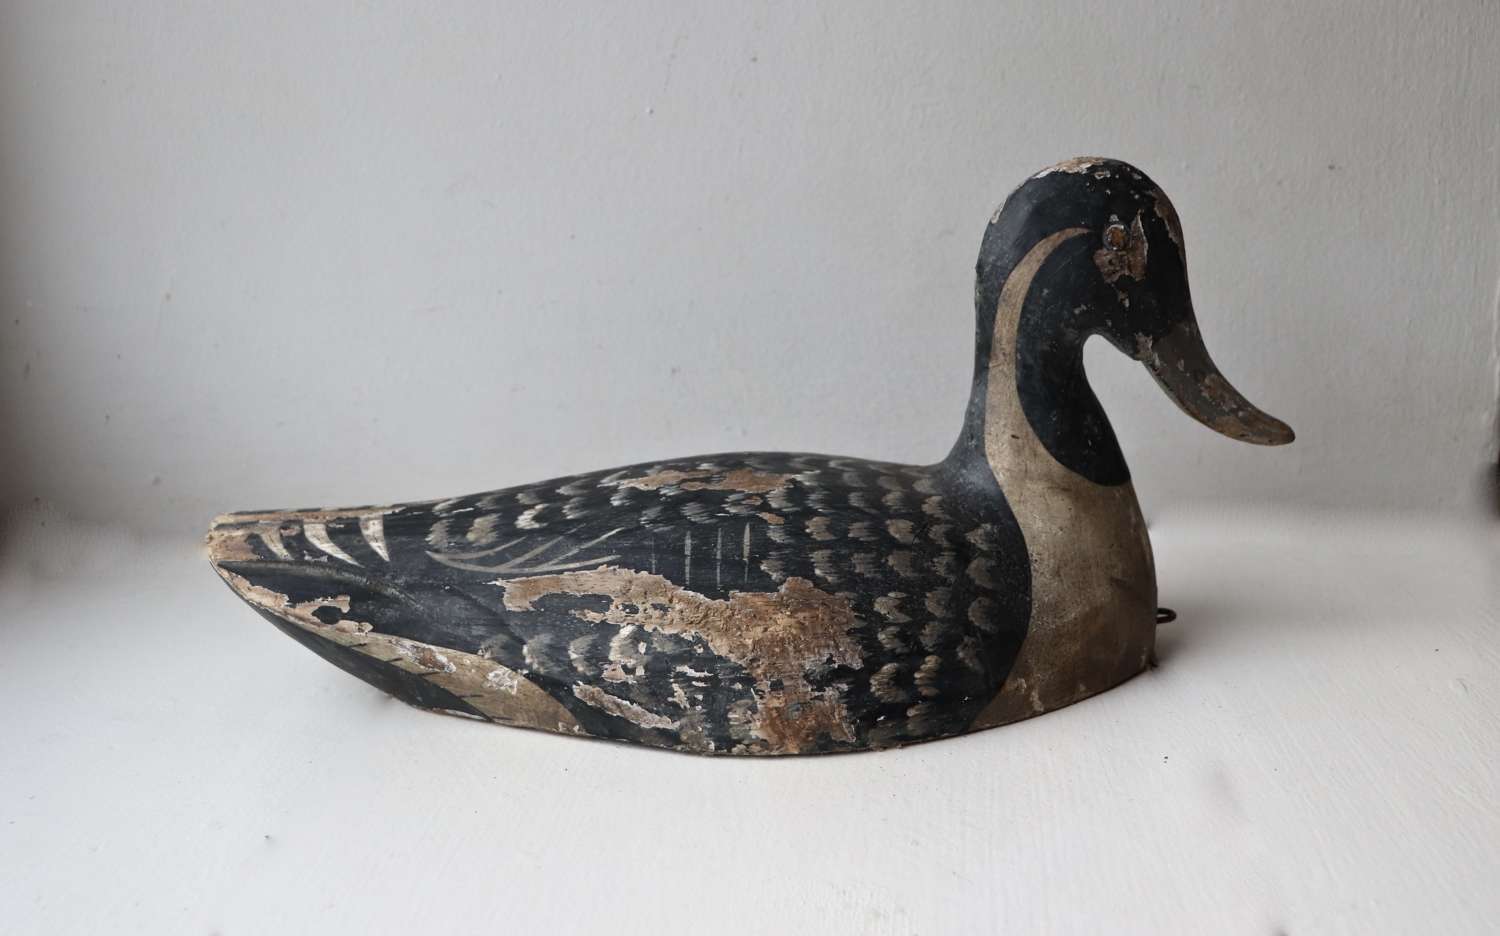 19th century wooden duck decoy